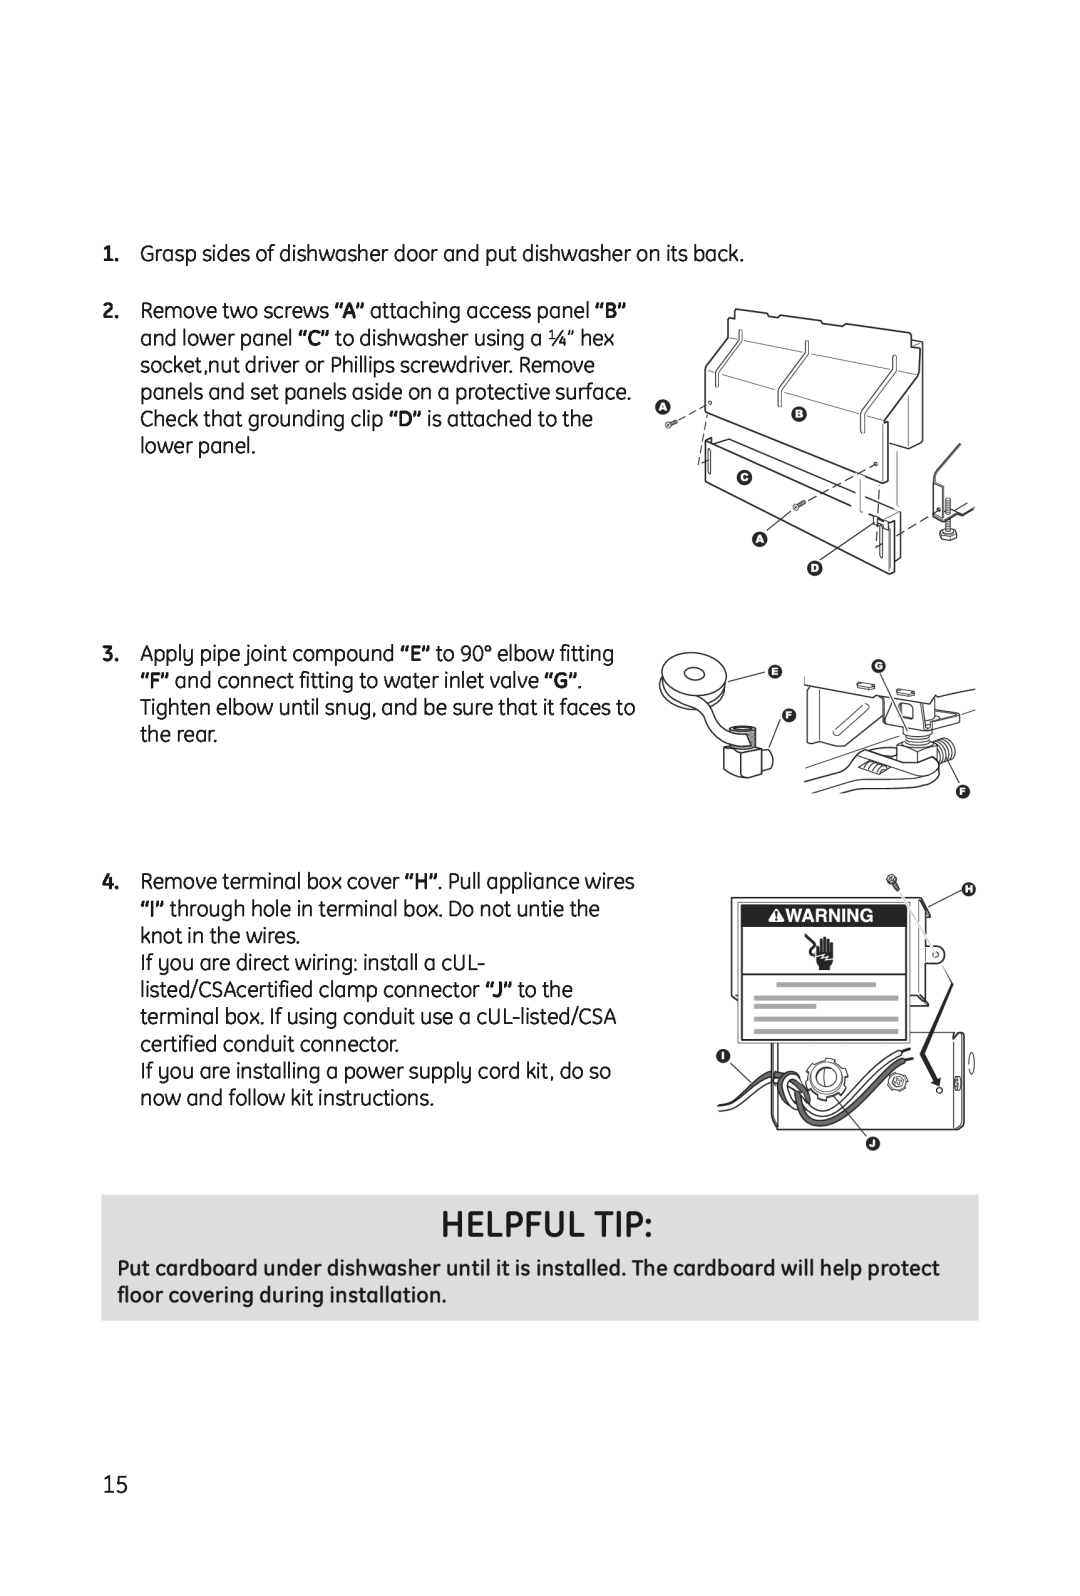 Haier DWL3025 installation manual Helpful Tip, Grasp sides of dishwasher door and put dishwasher on its back 